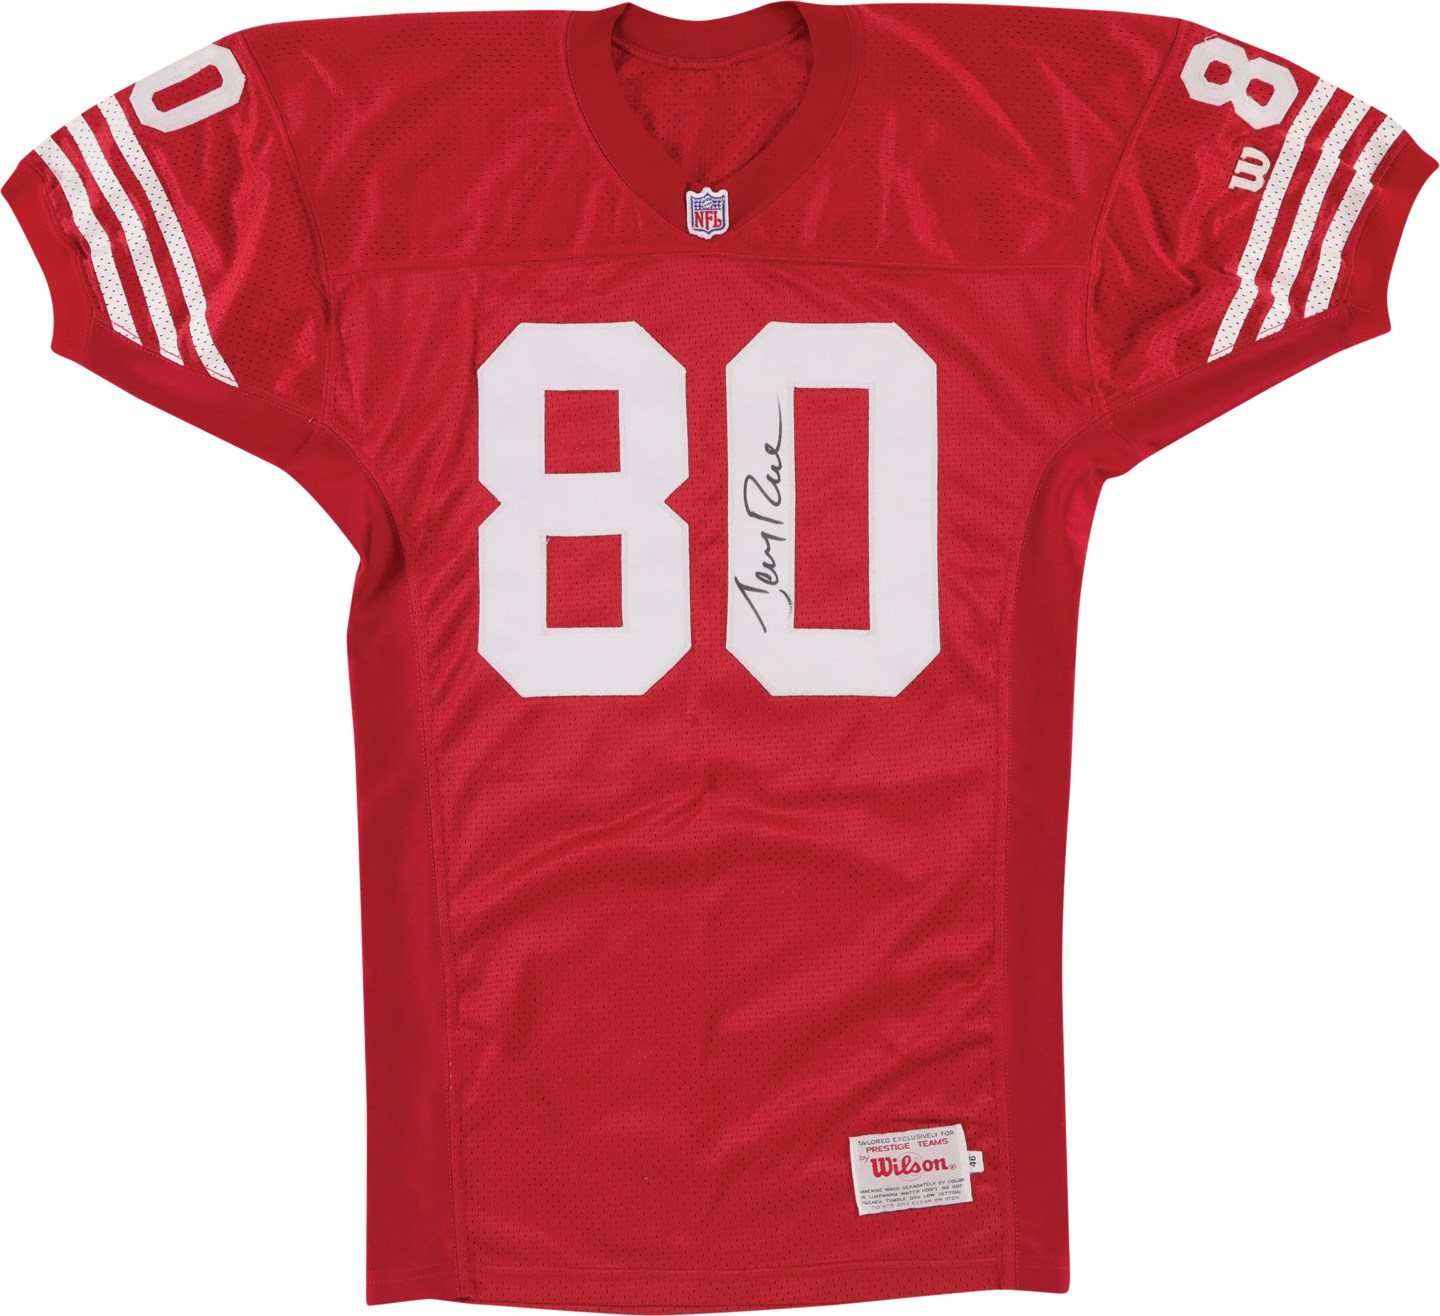 Circa 1993 Jerry Rice San Francisco 49ers Signed Game Jersey (PSA)